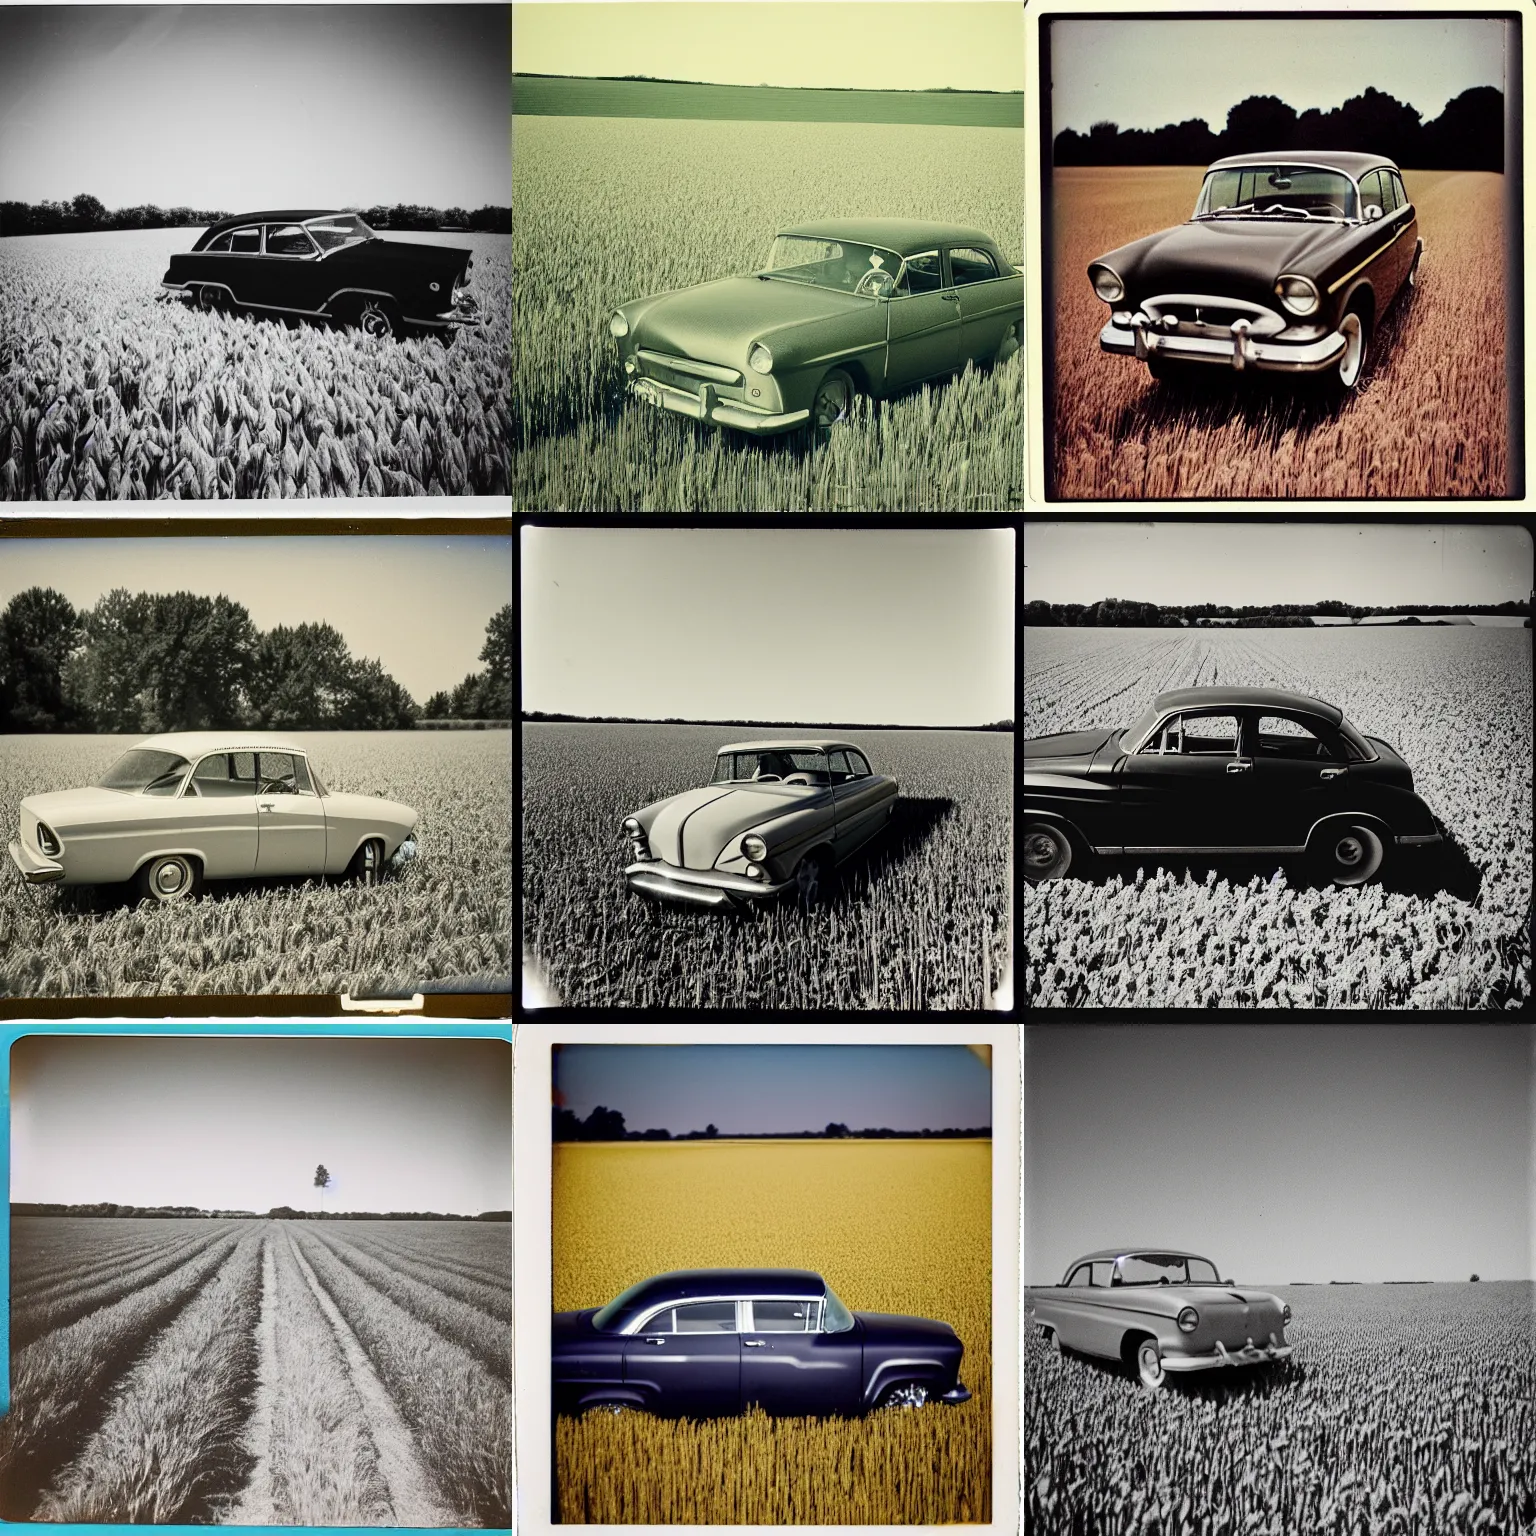 Prompt: old 5 0 s car broken down, field of wheat, polaroid, film still